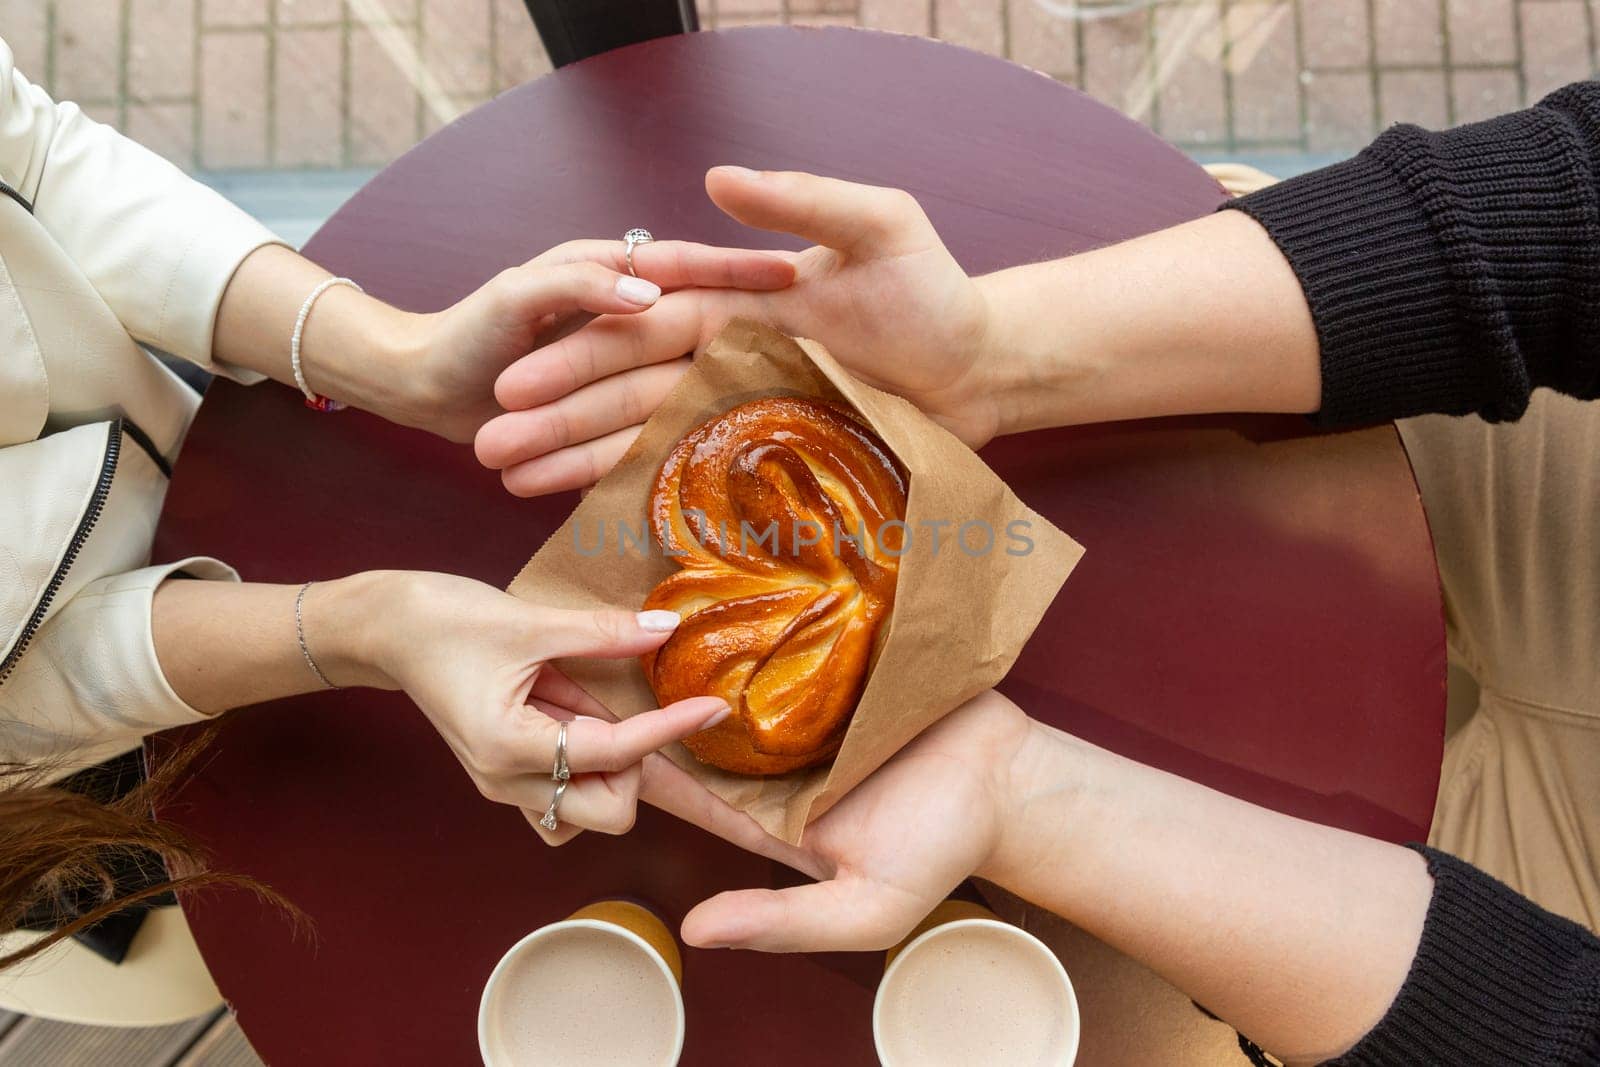 A guy with a girl on a date in a cafe. The guy hands the girl a heart-shaped bun.